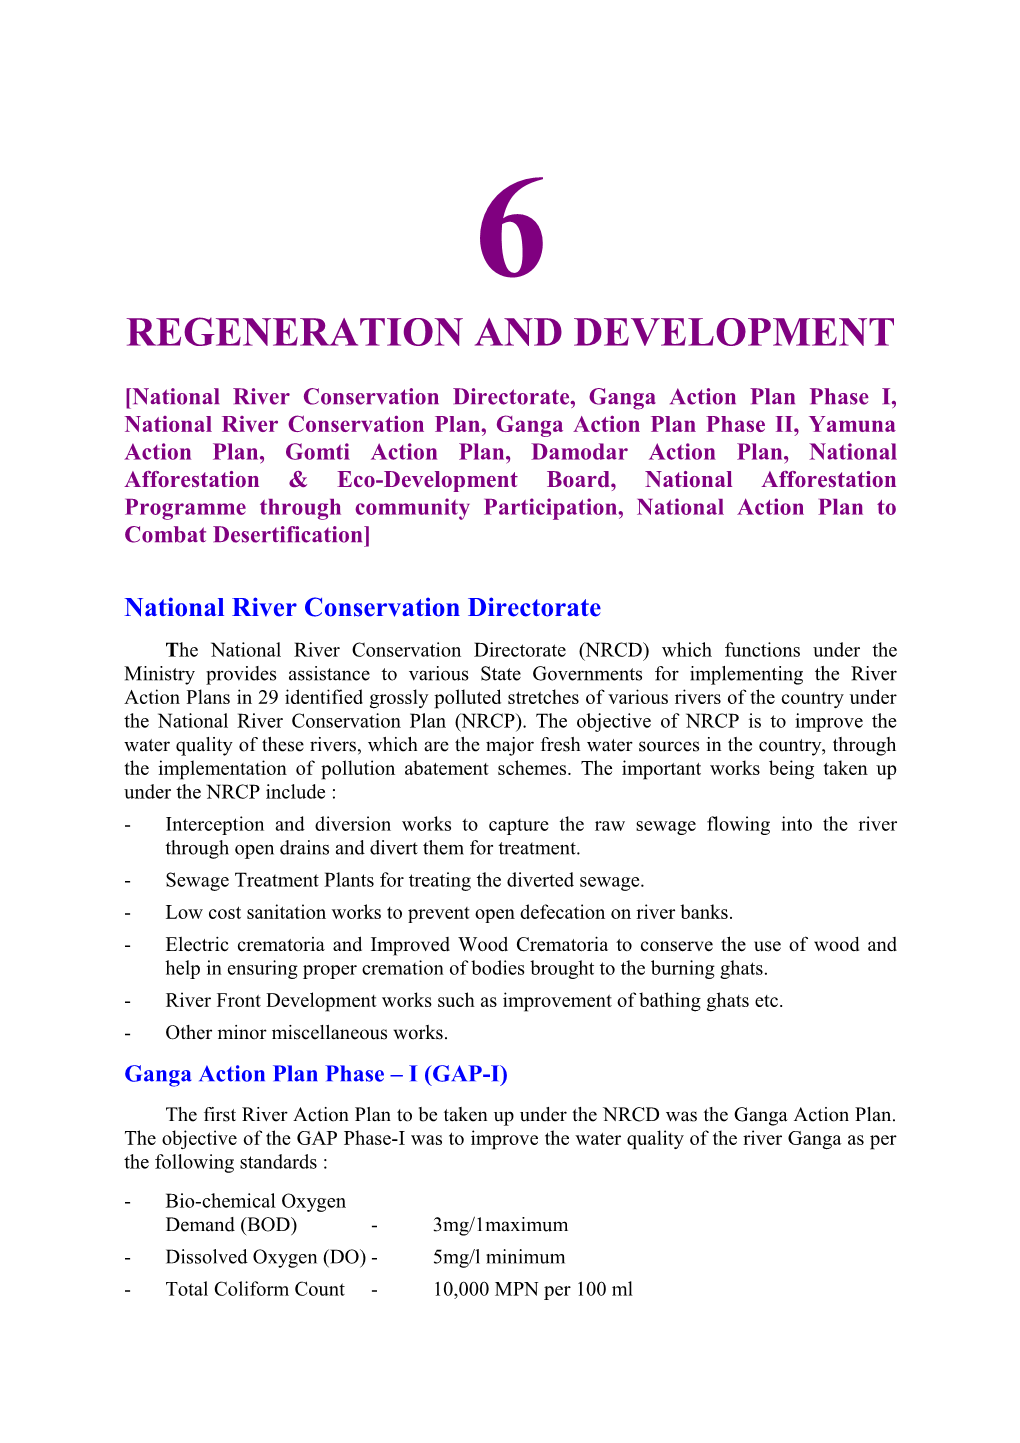 Regeneration and Development